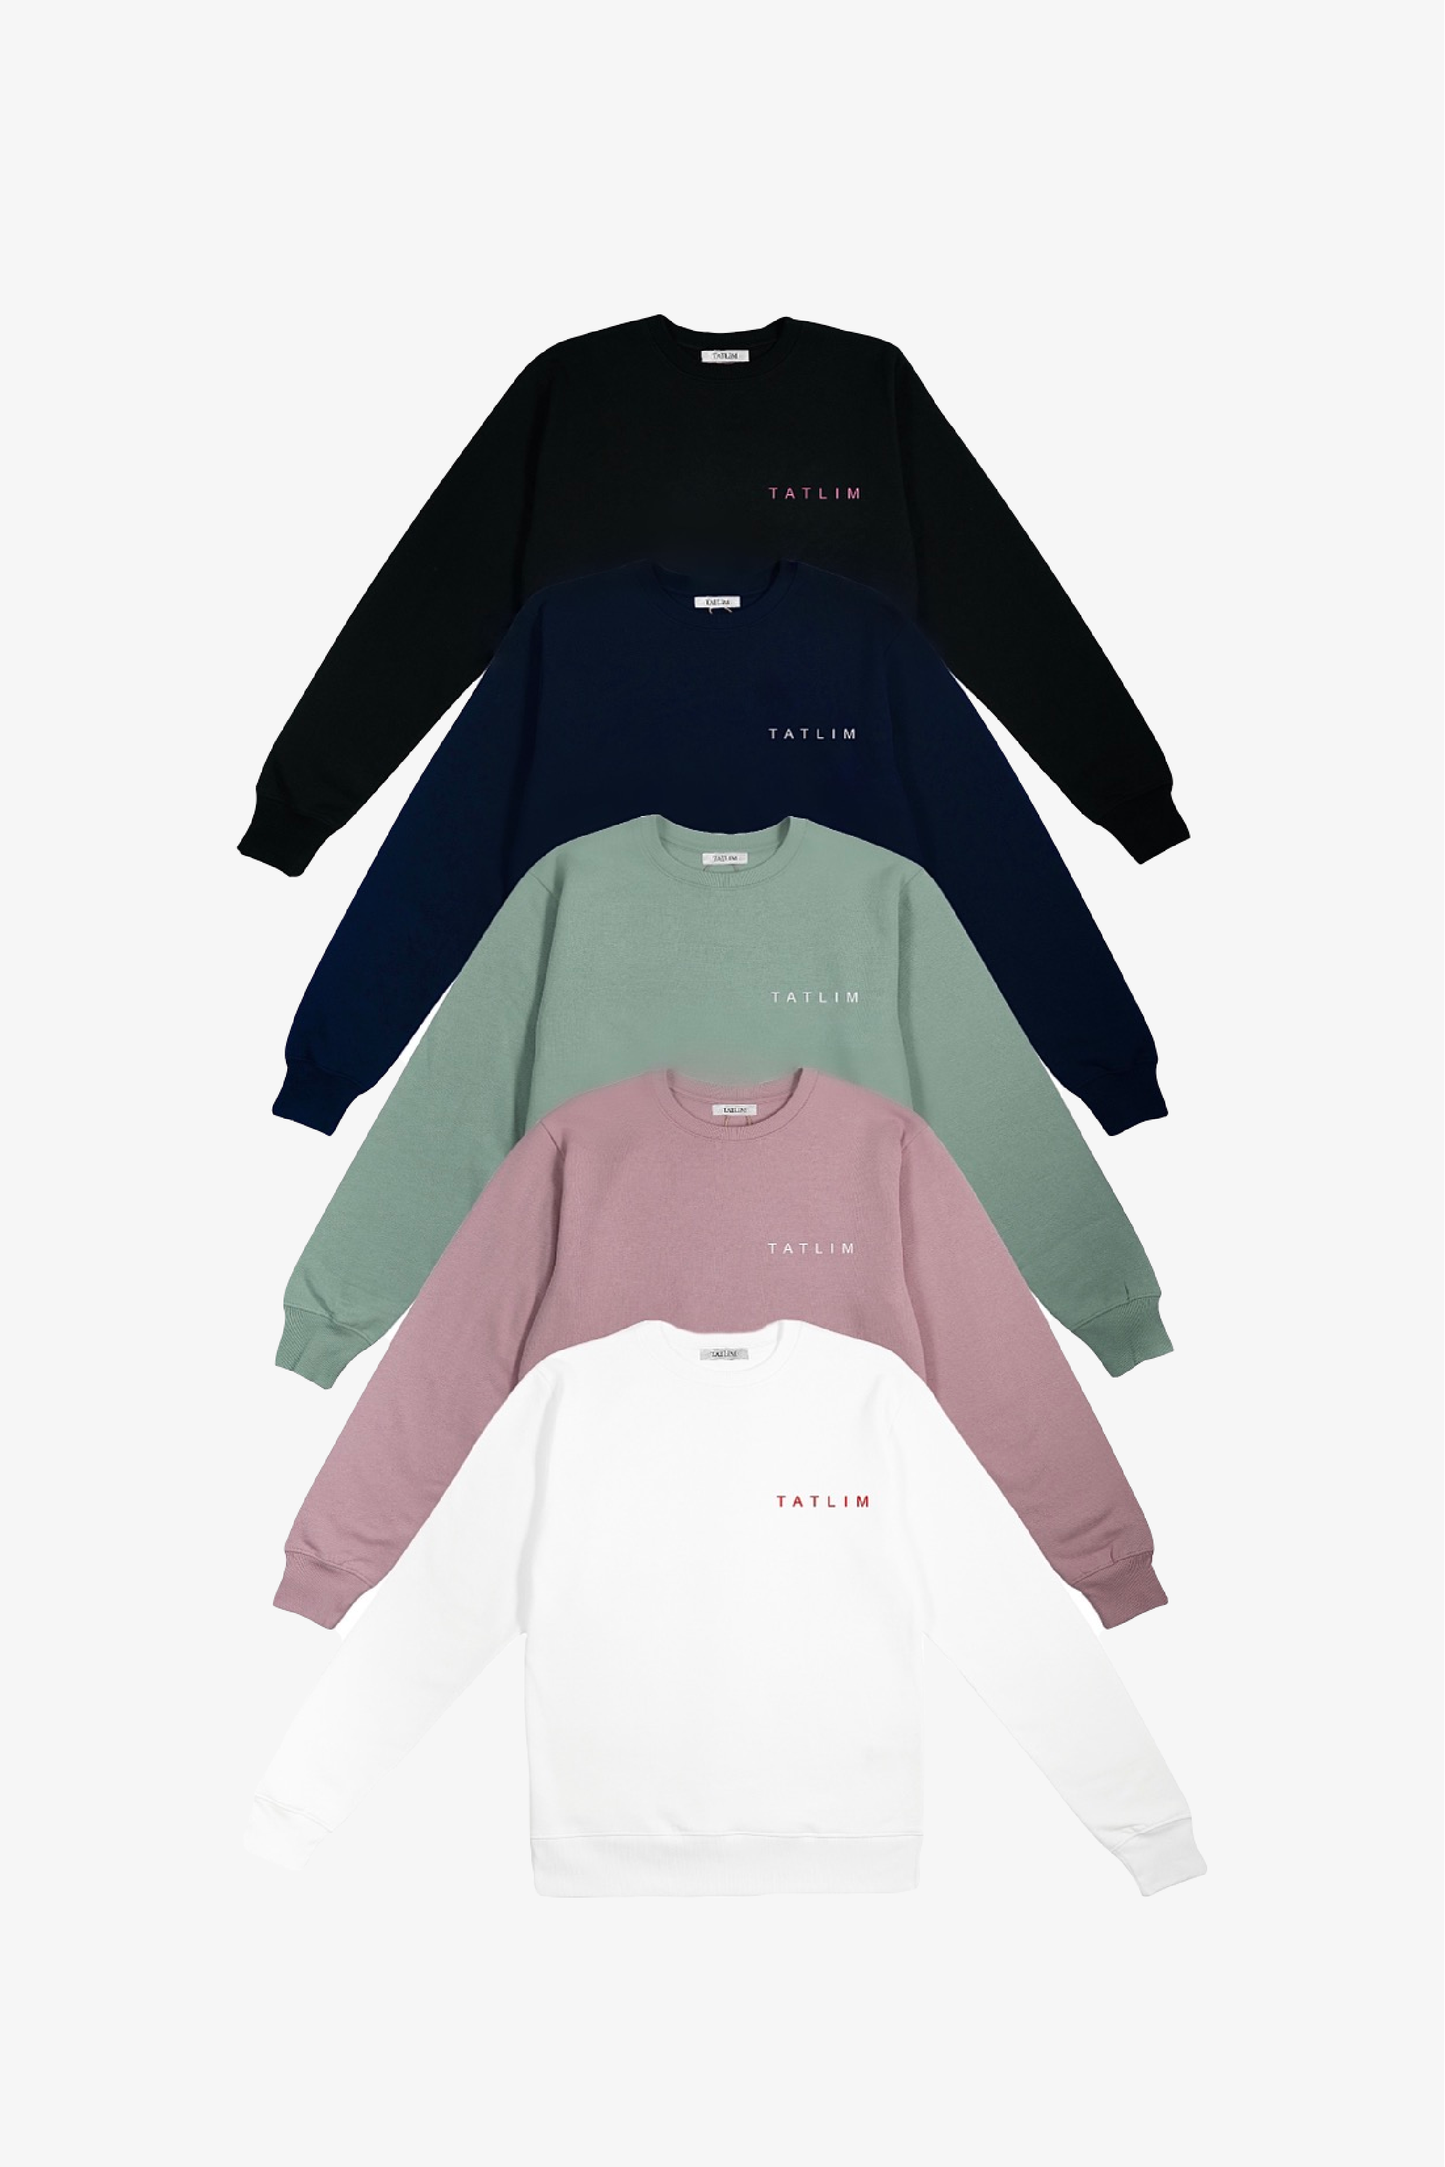 Tatlim Essentials Sweatshirt (Multiple Colours)